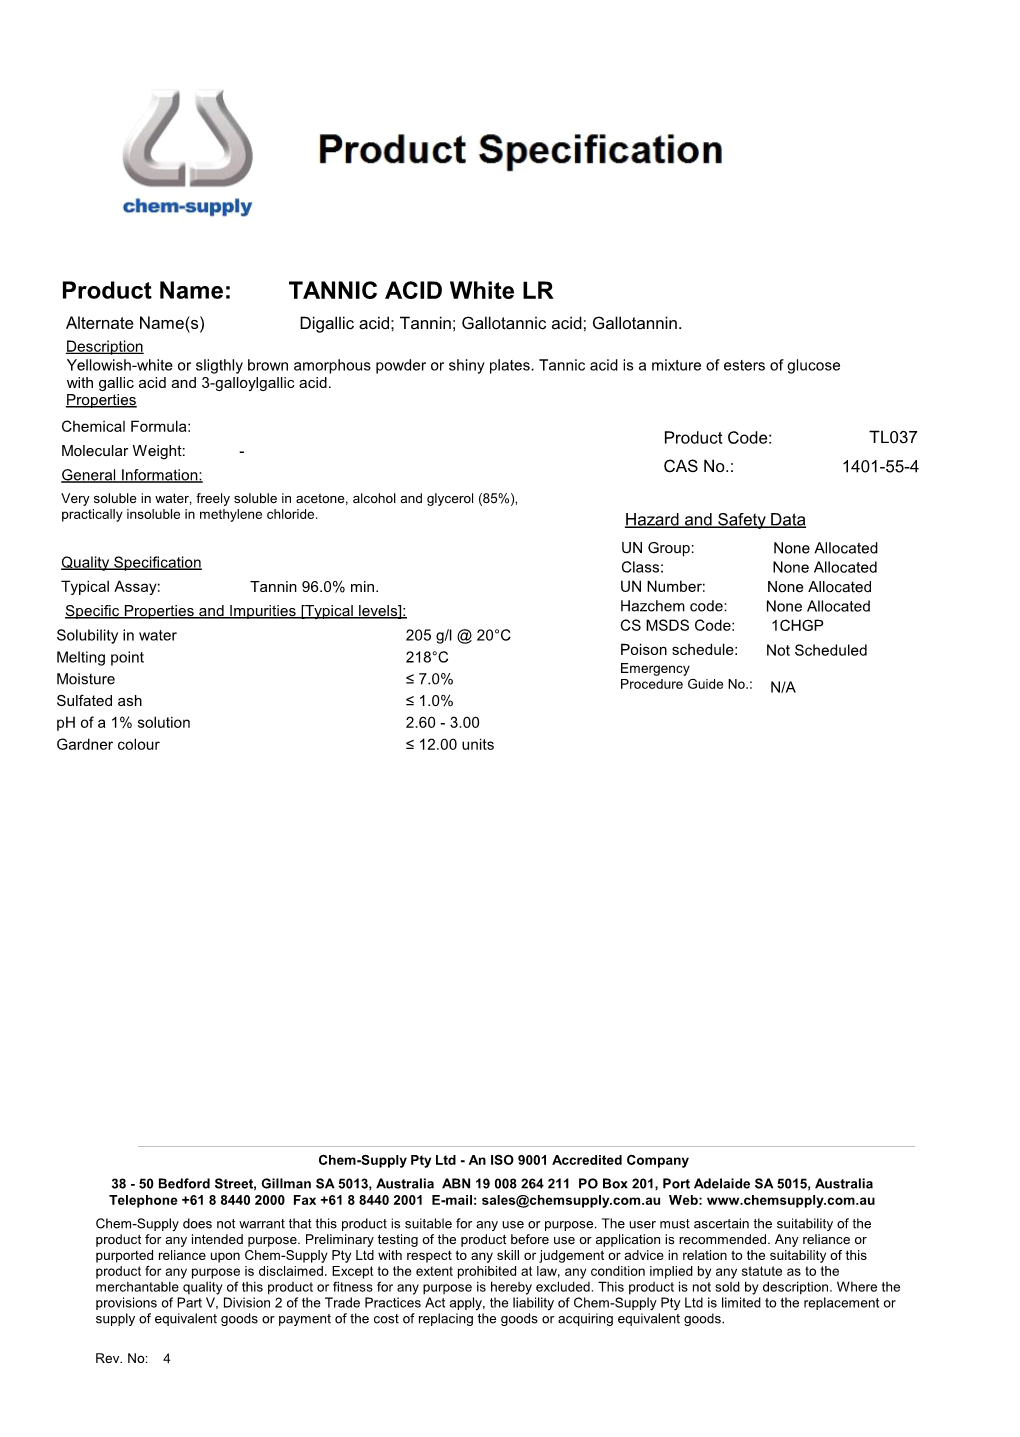 Product Name: TANNIC ACID White LR Alternate Name(S) Digallic Acid; Tannin; Gallotannic Acid; Gallotannin